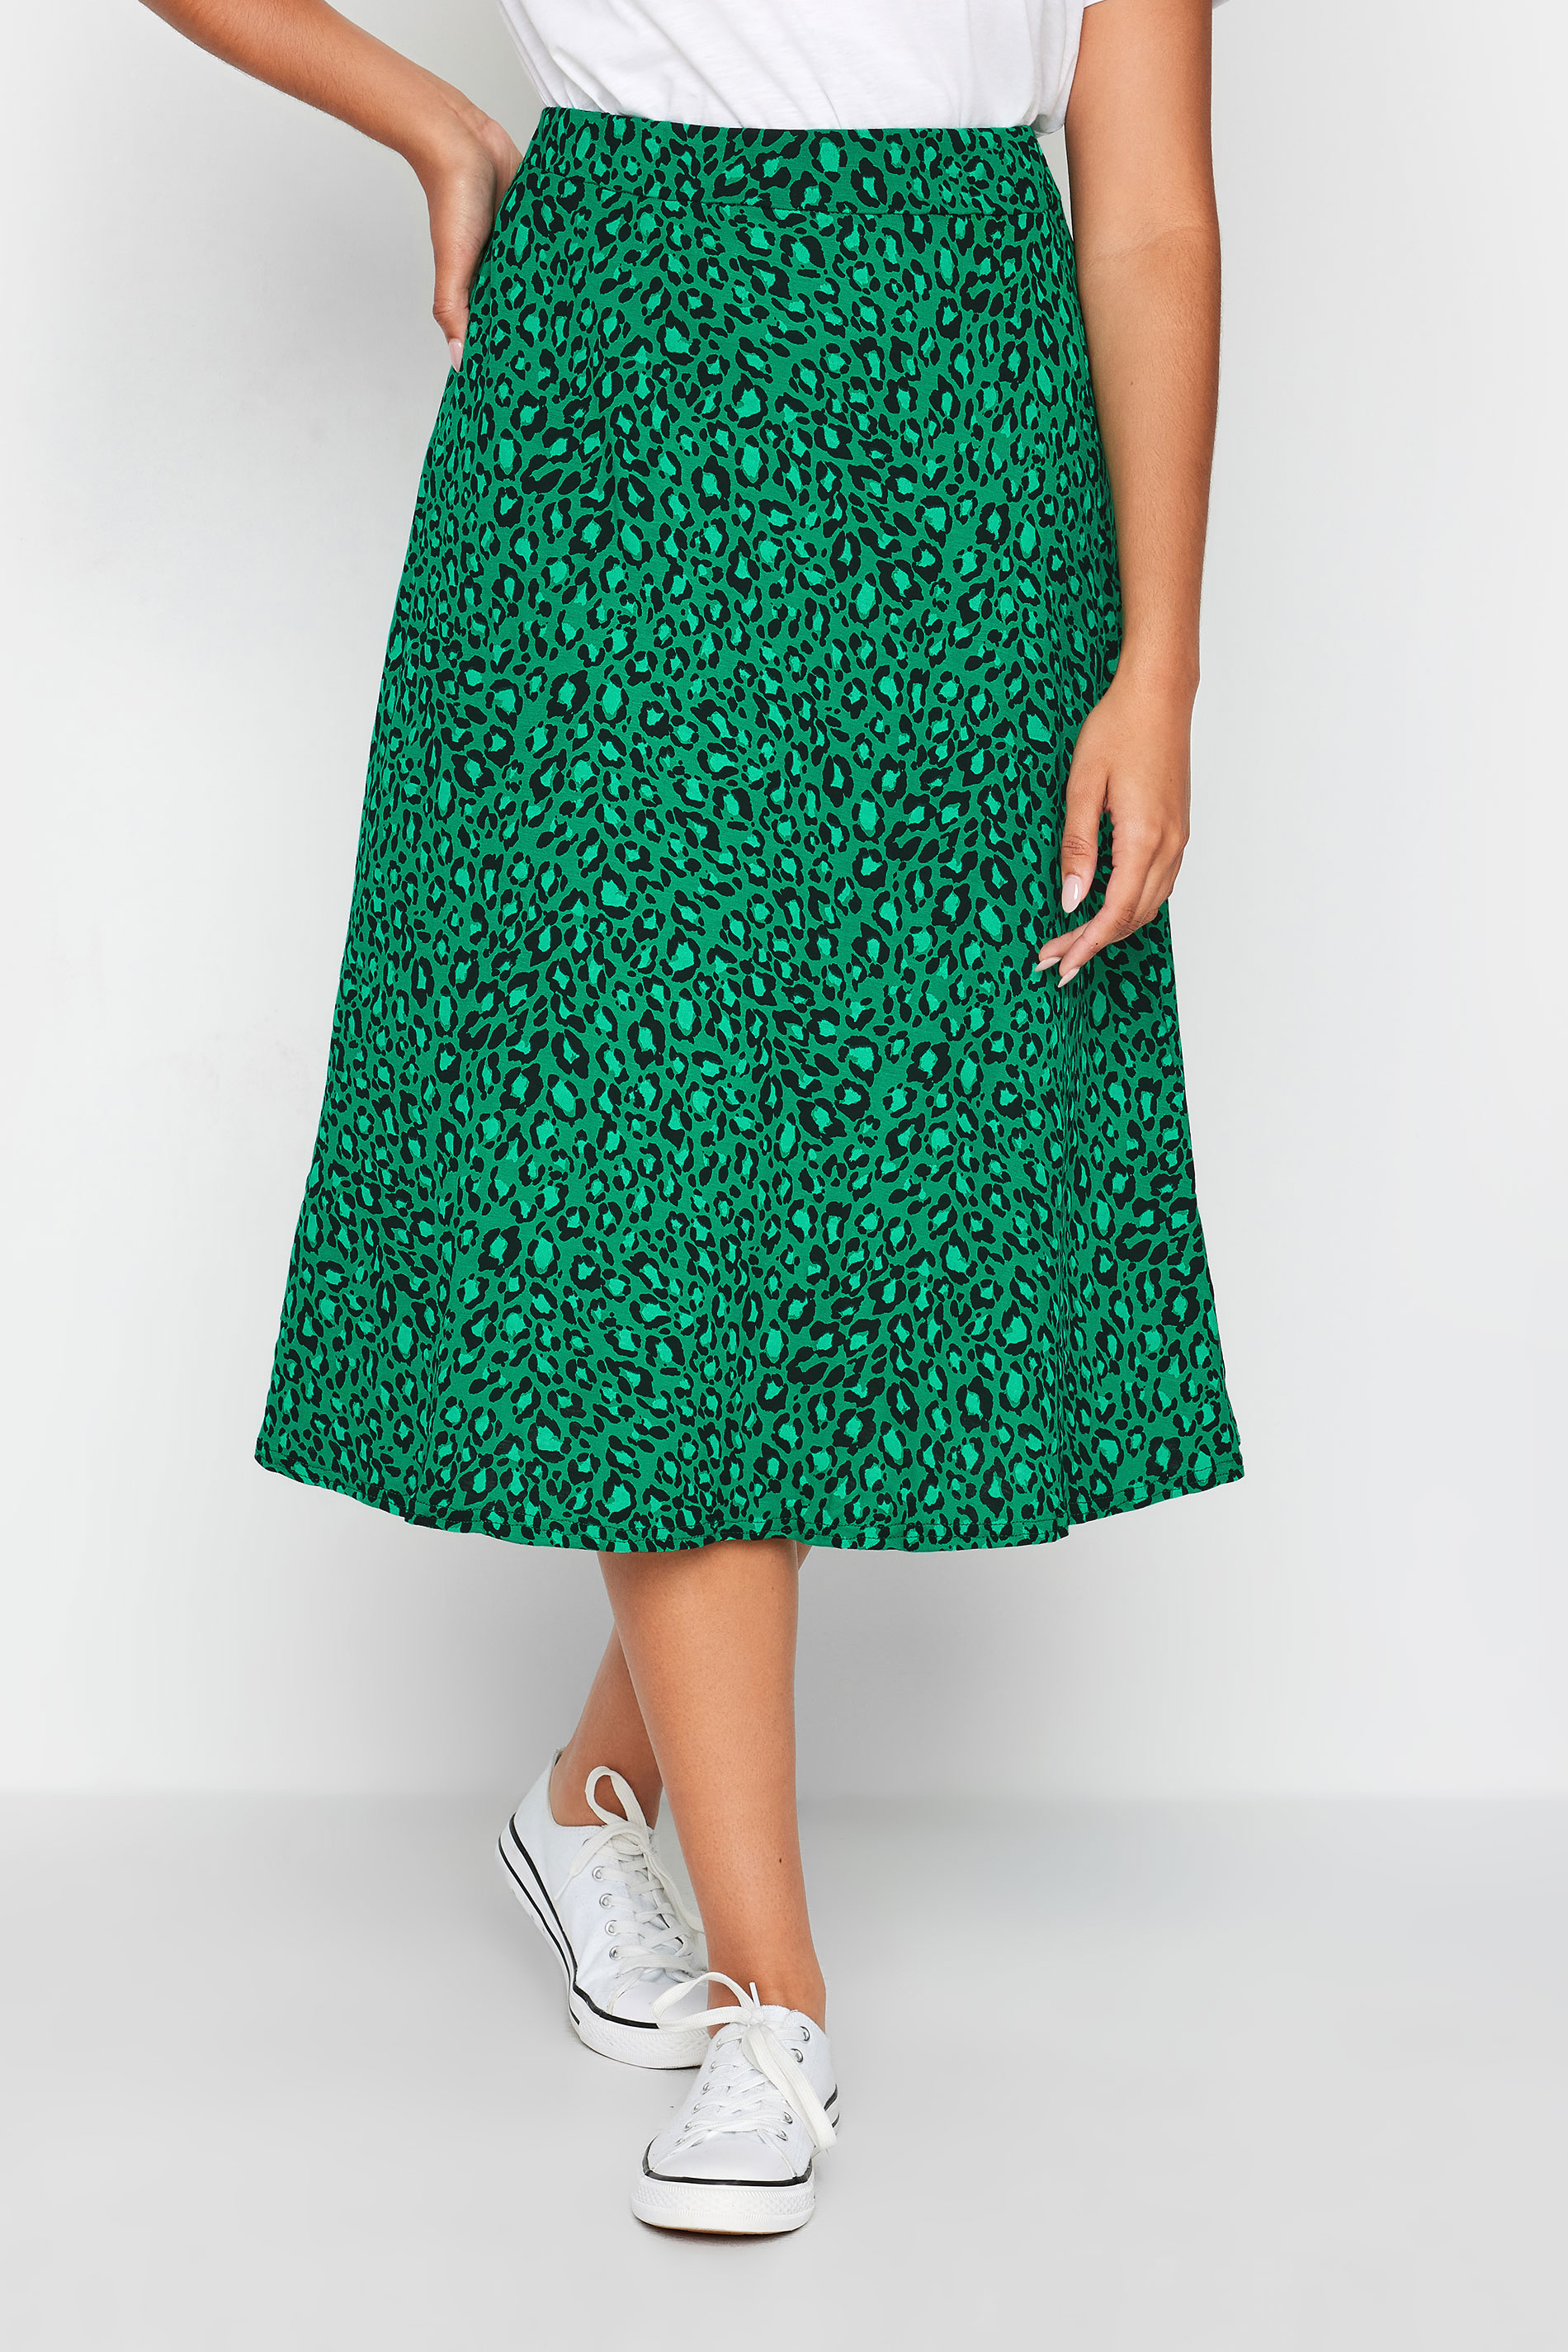 M&Co Green Animal Print Print Jersey Midi Skirt | M&Co 1